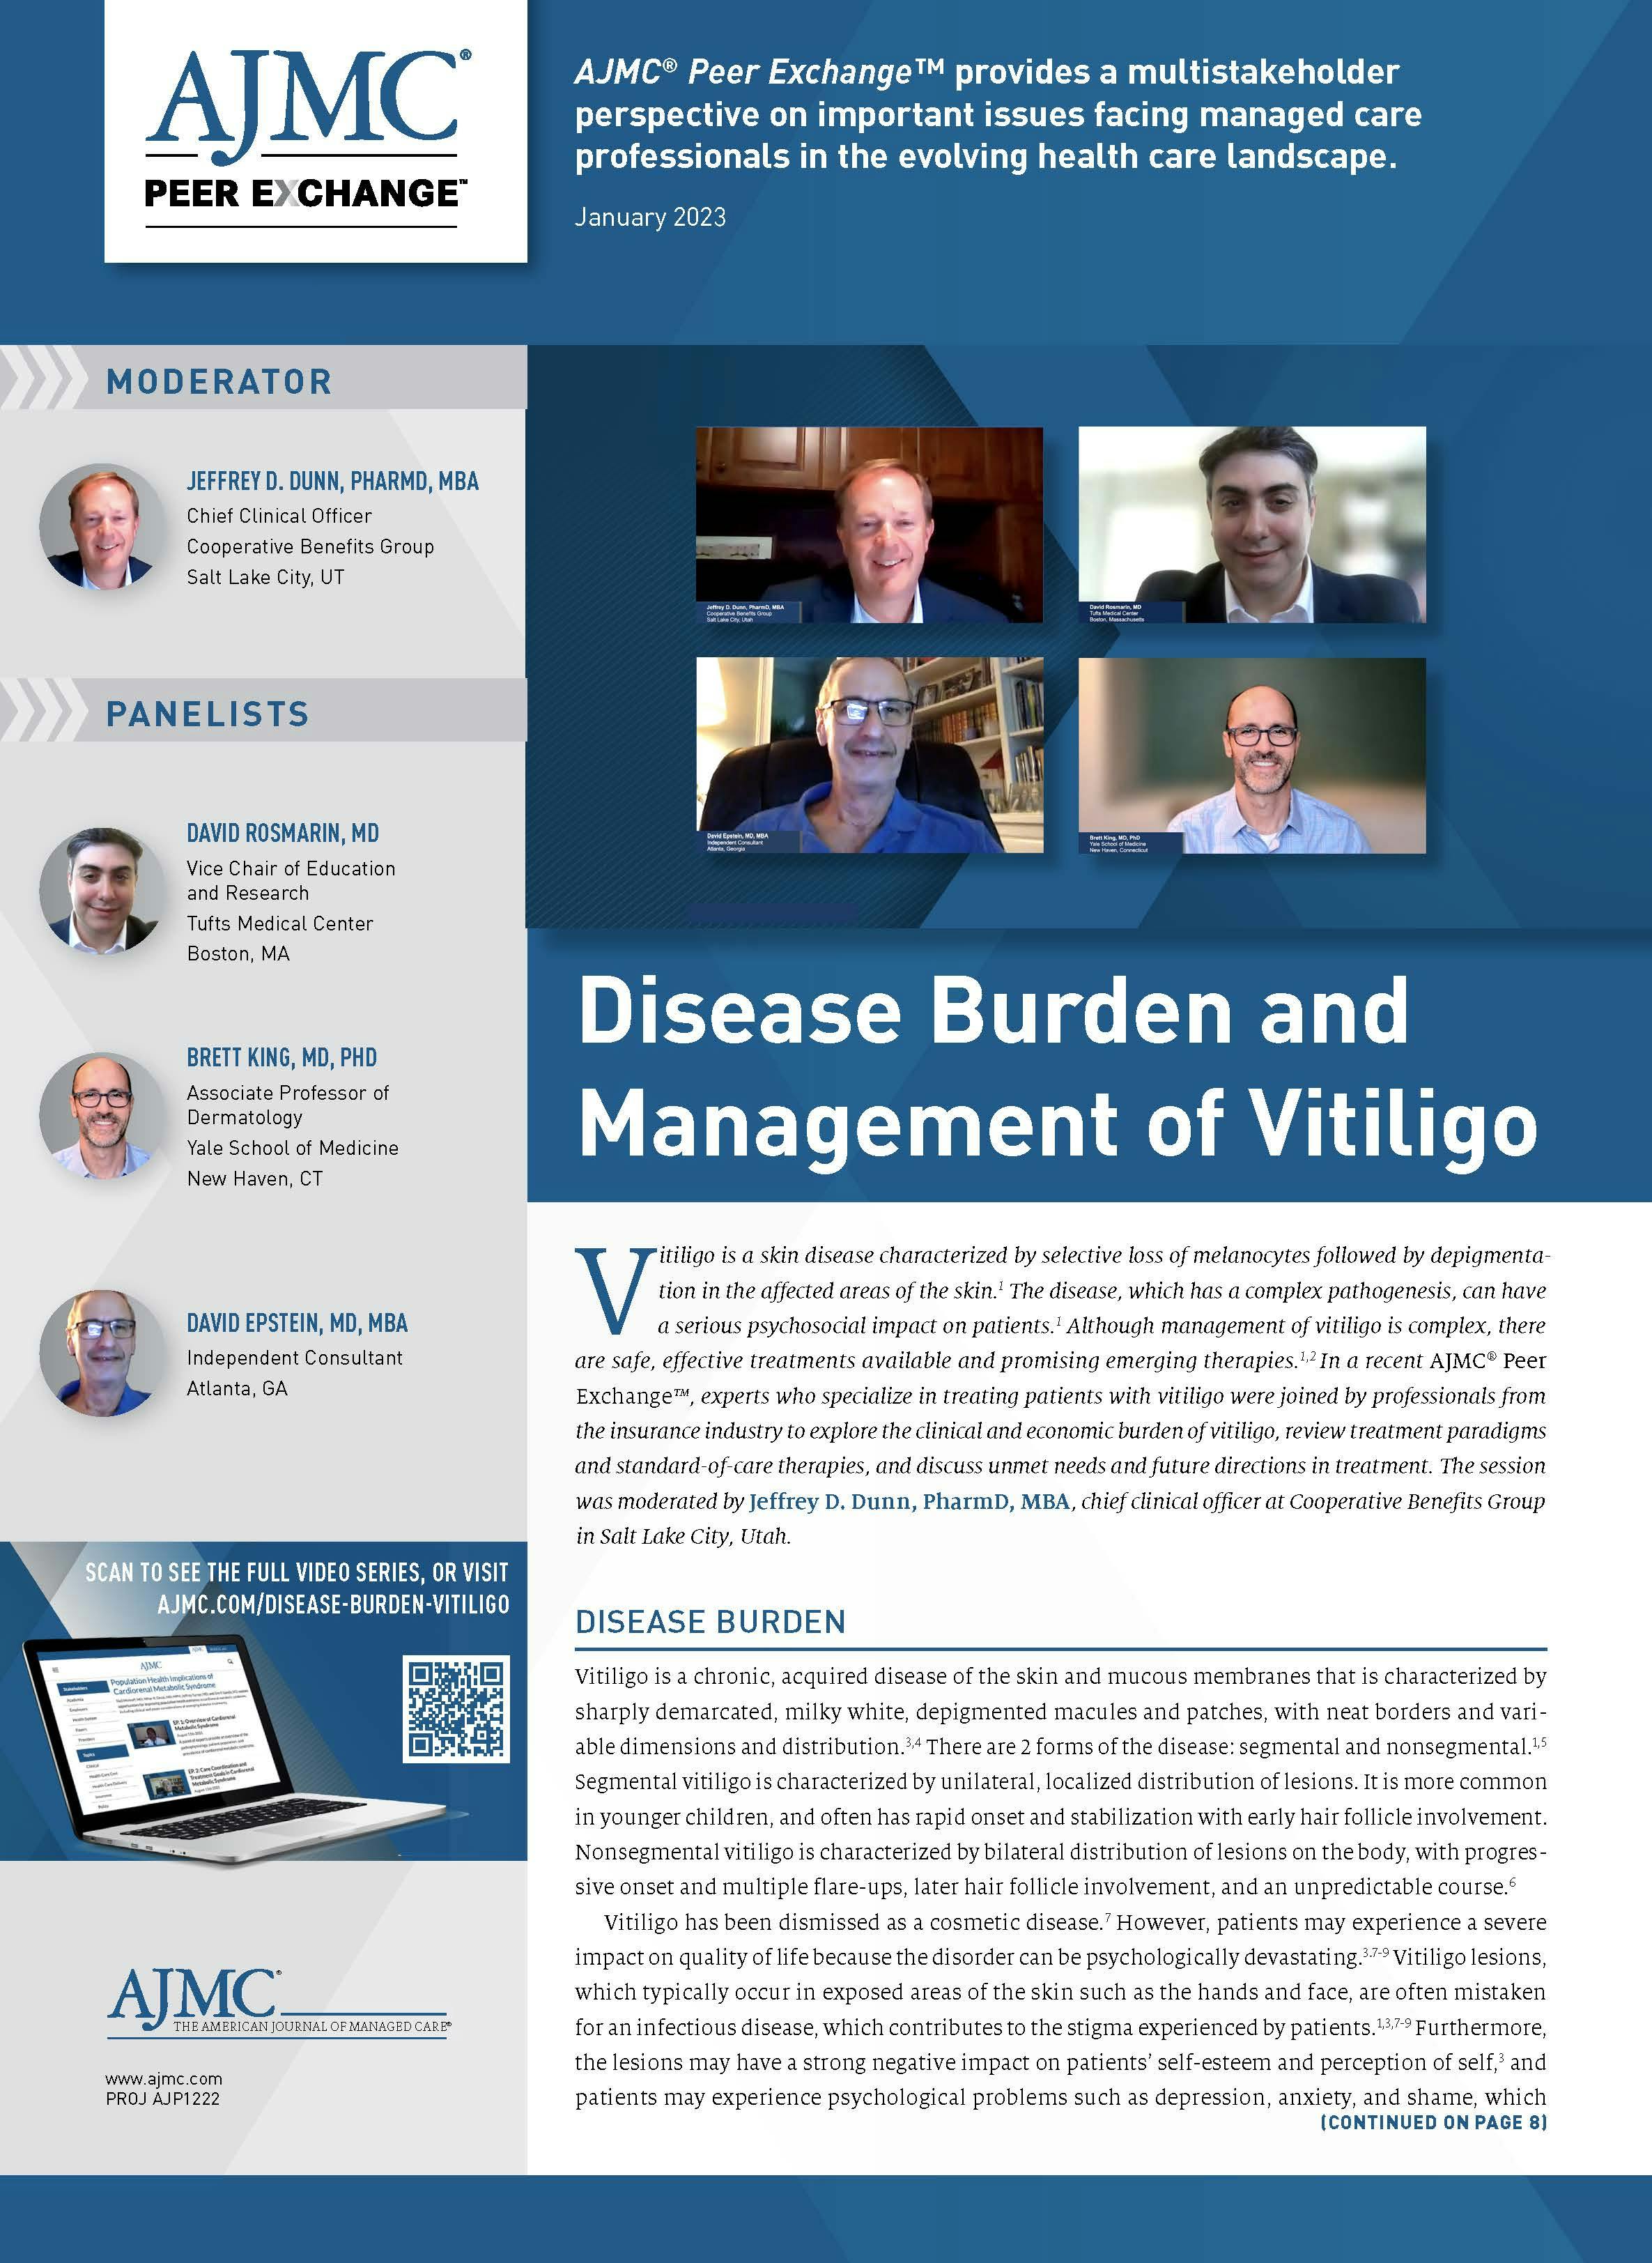 Disease Burden and Management of Vitiligo